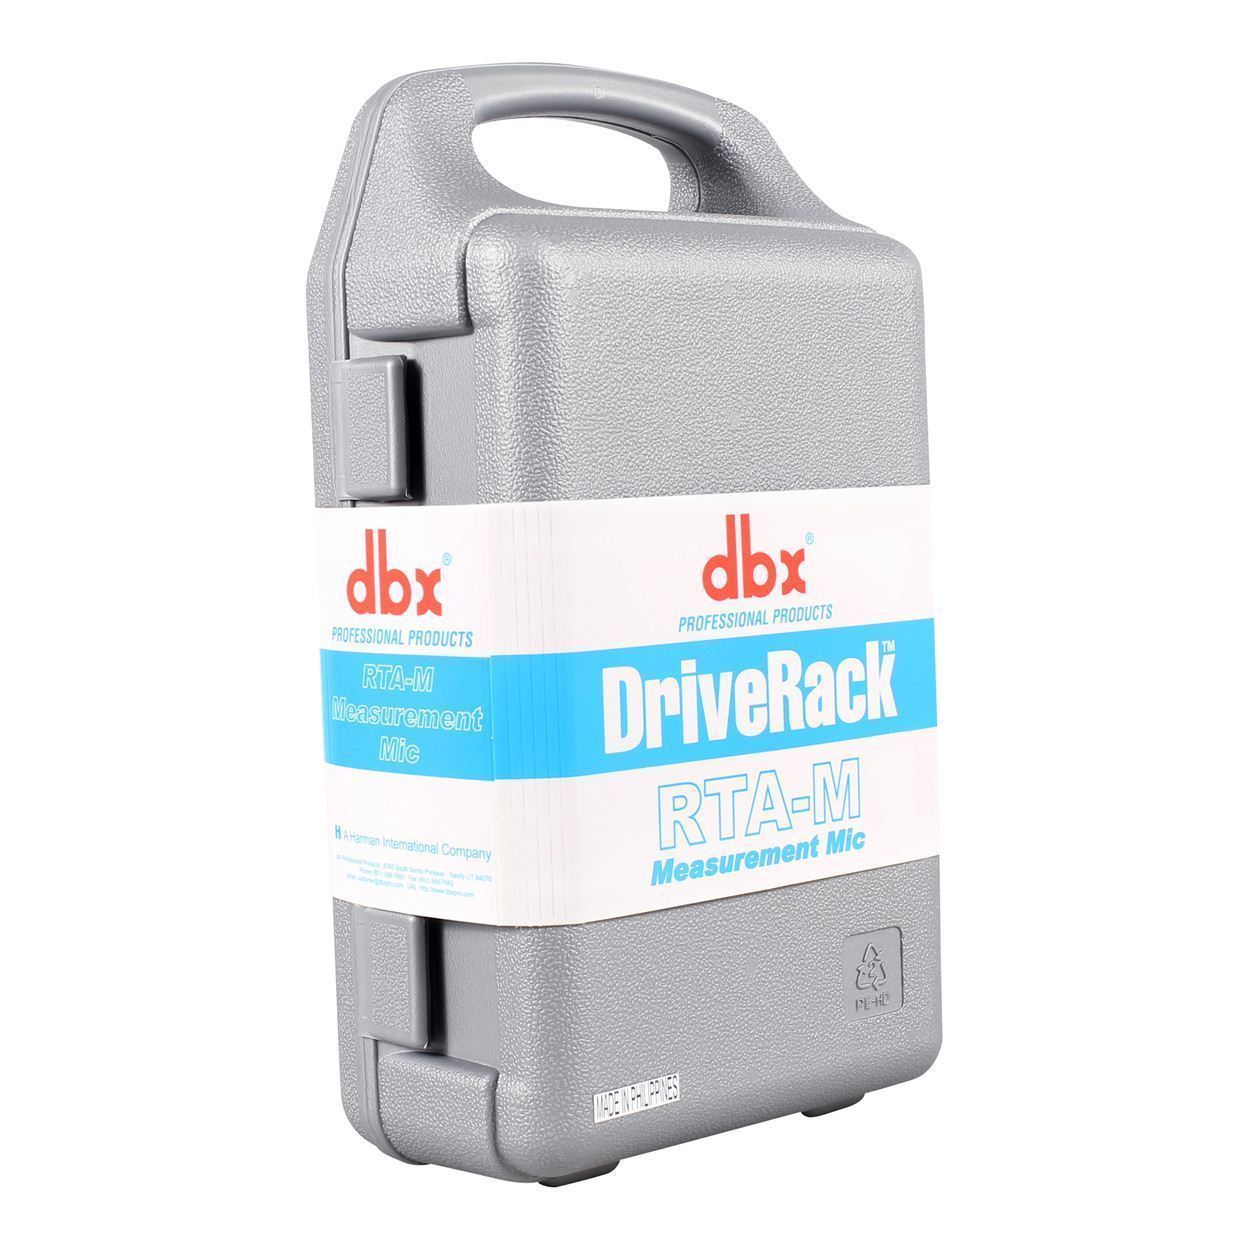 dbx driverack 260 setup english